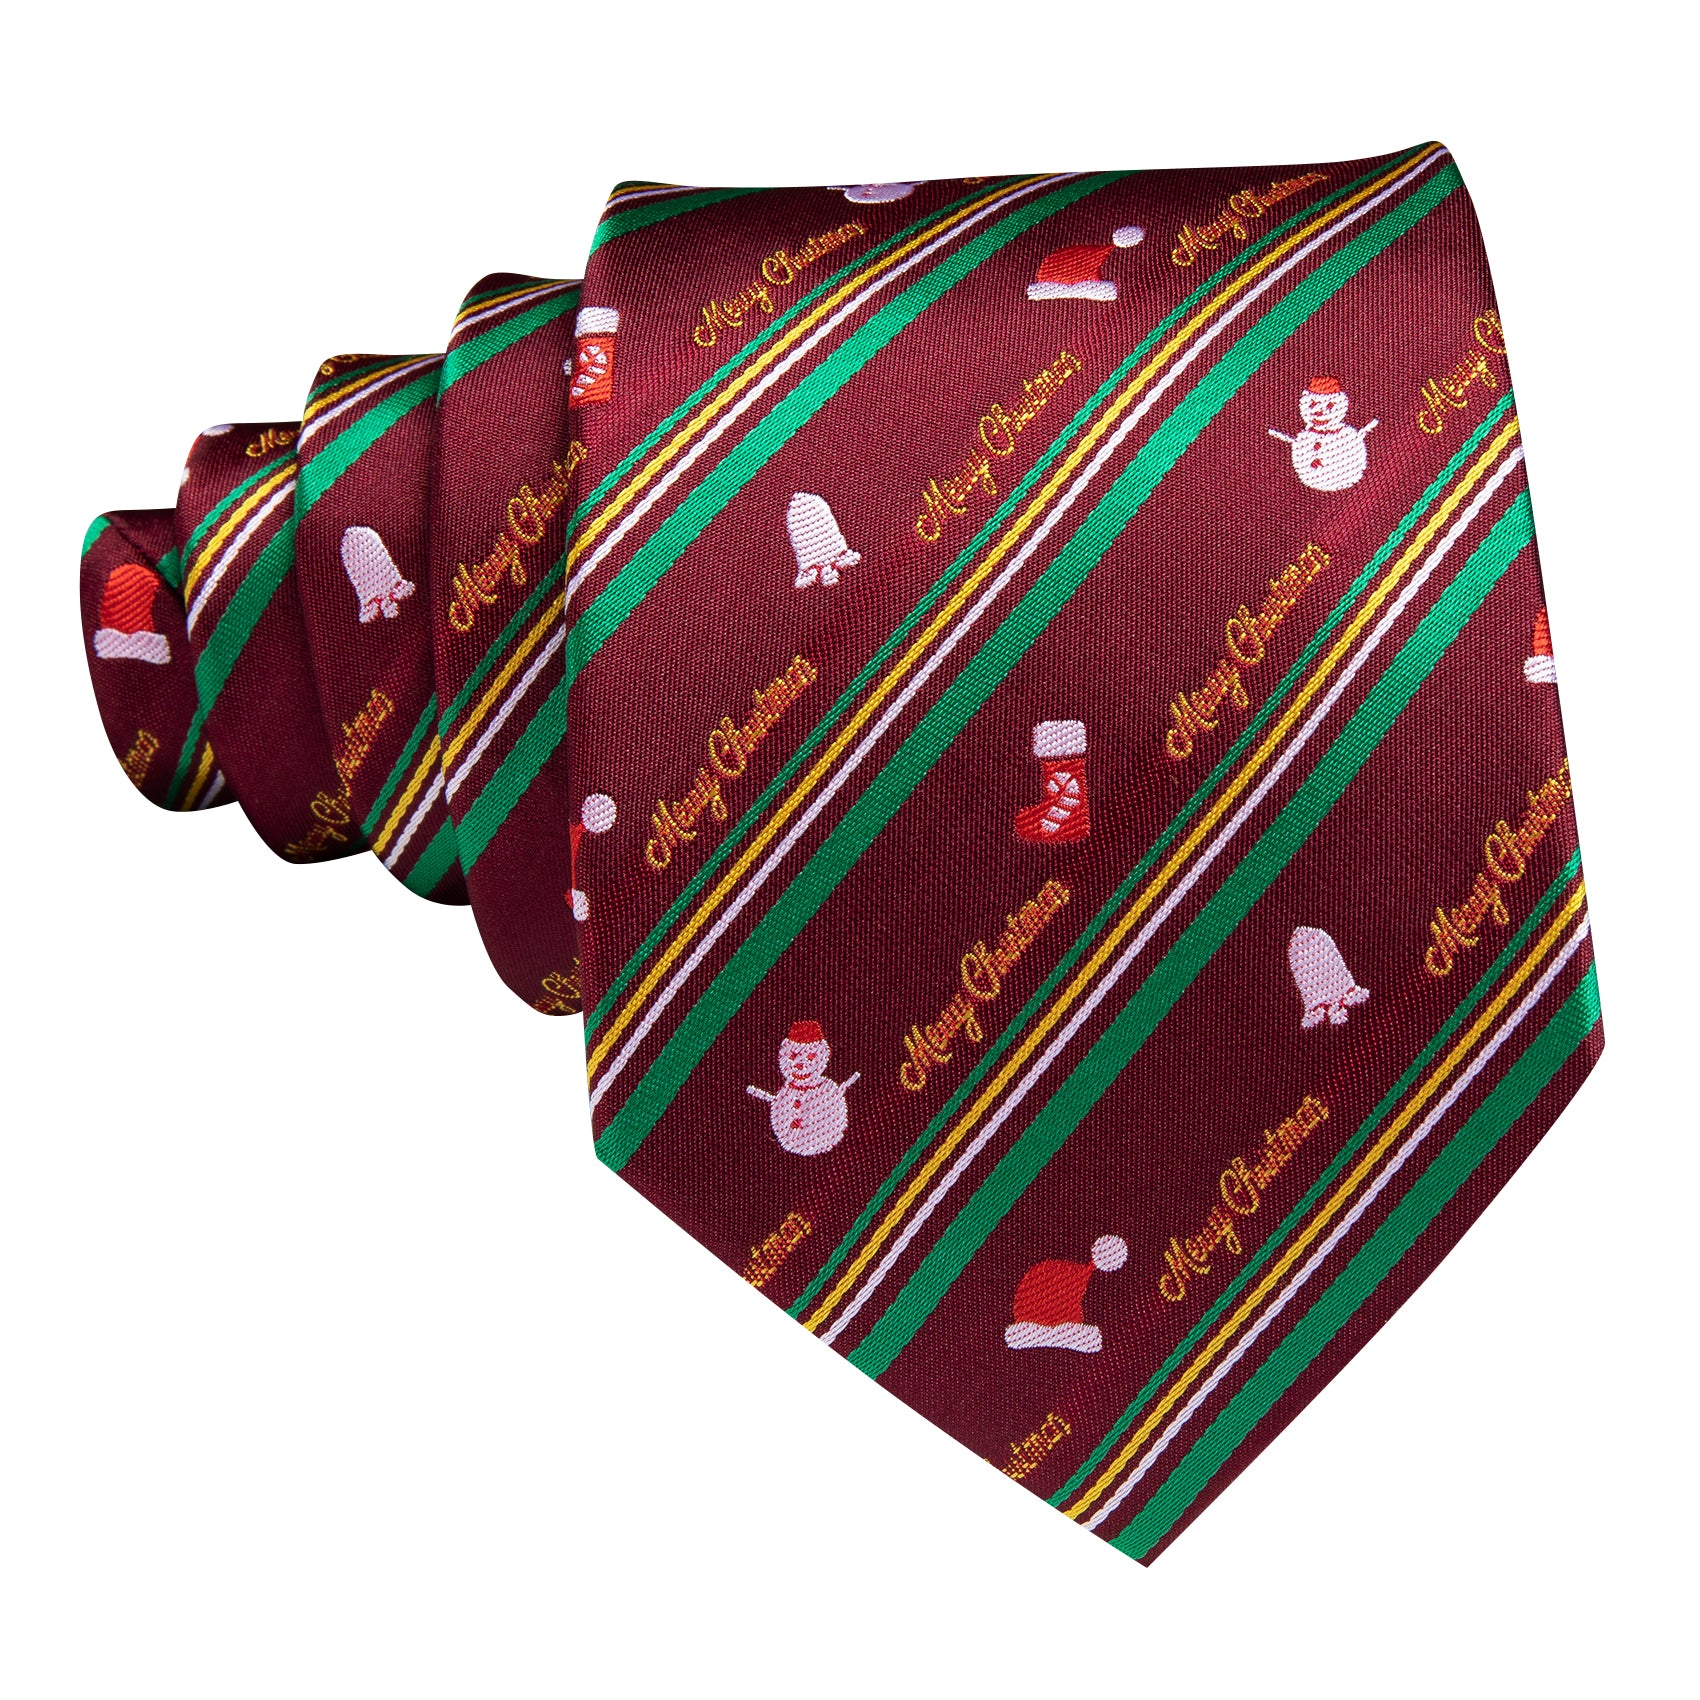 Barry.wang Christmas Tie Claret Xmas Santa Claus Pattern Men's Tie Set